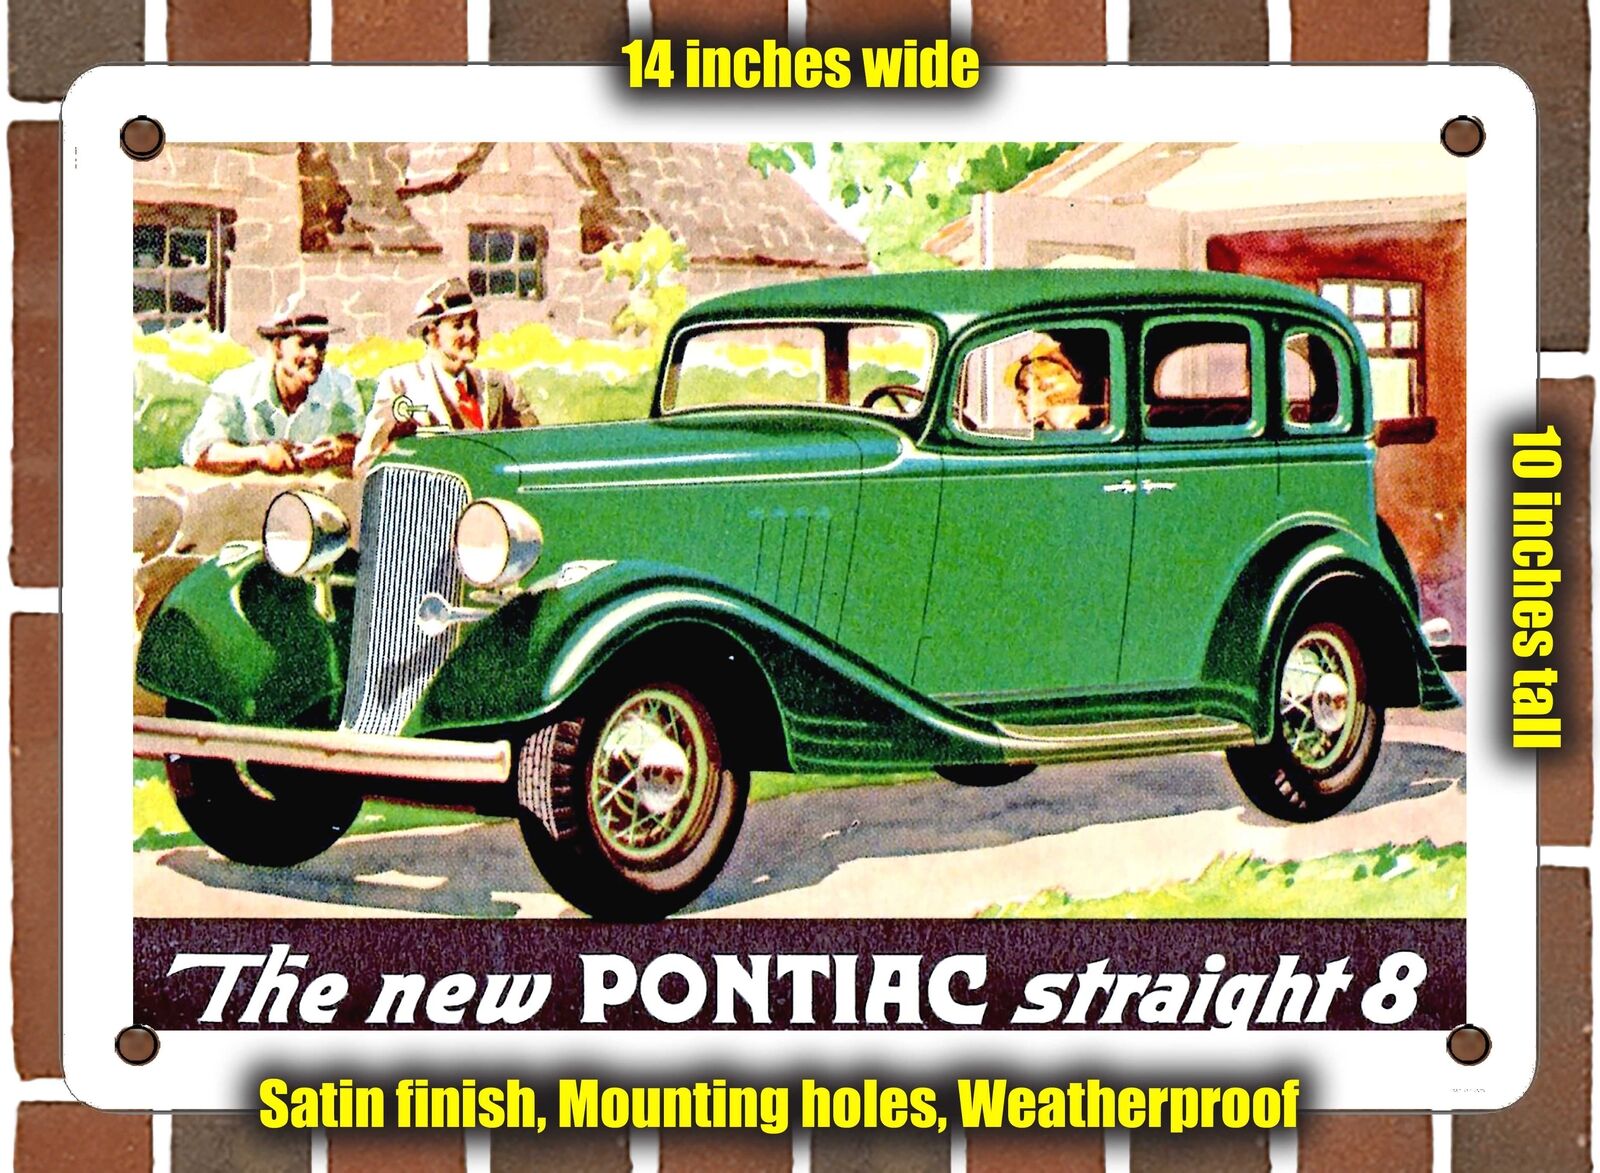 METAL SIGN - 1933 Pontiac Straight 8 4 Door Sedan - 10x14 Inches